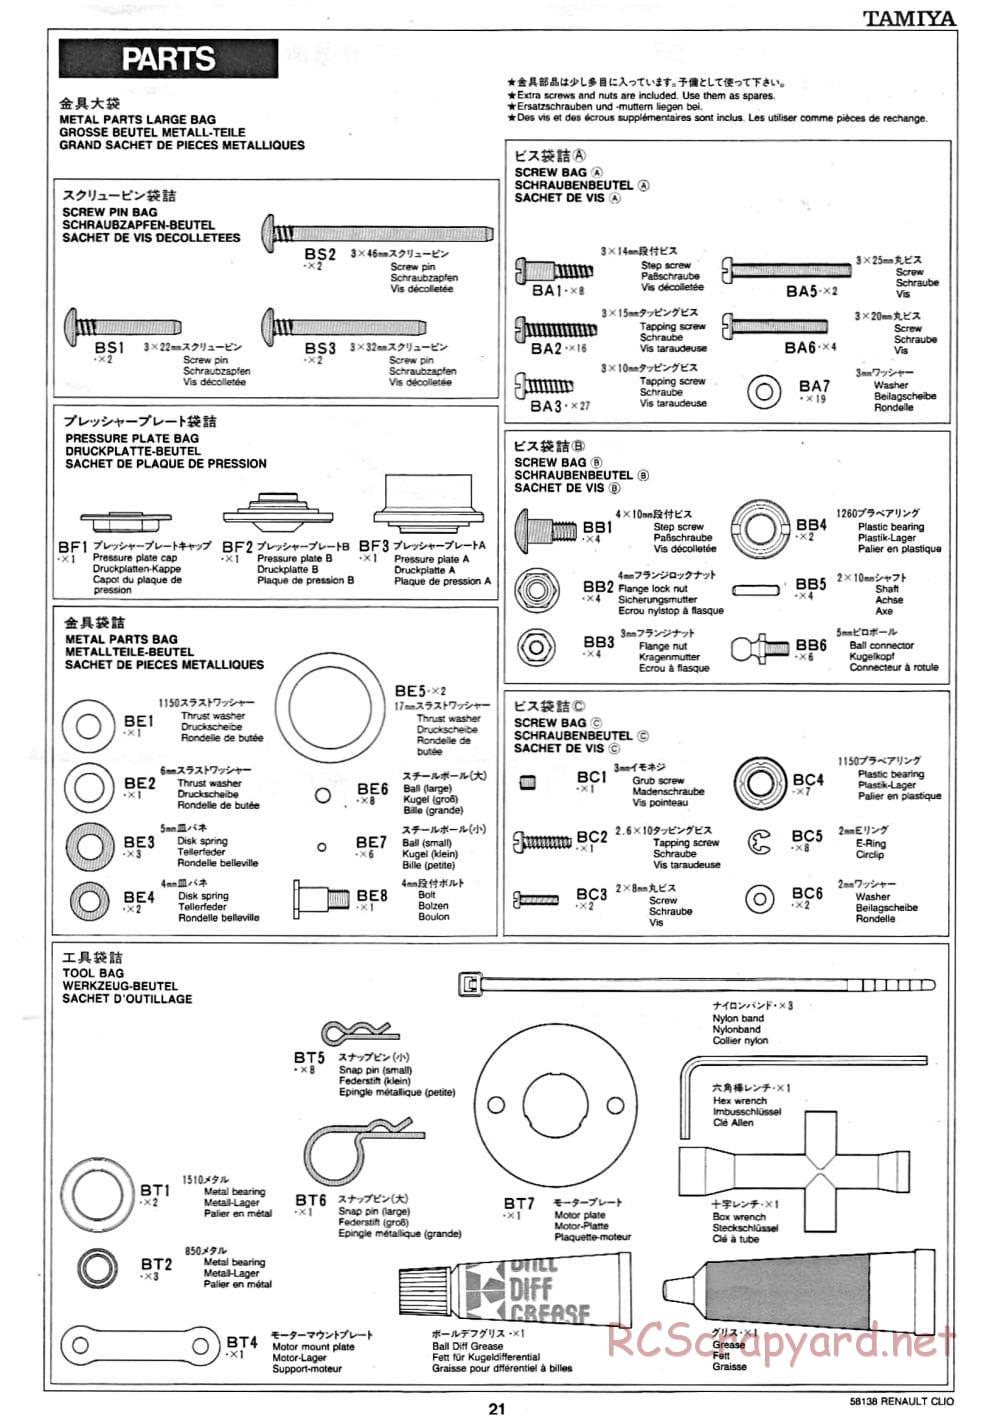 Tamiya - Renault Clio Williams Chassis - Manual - Page 22